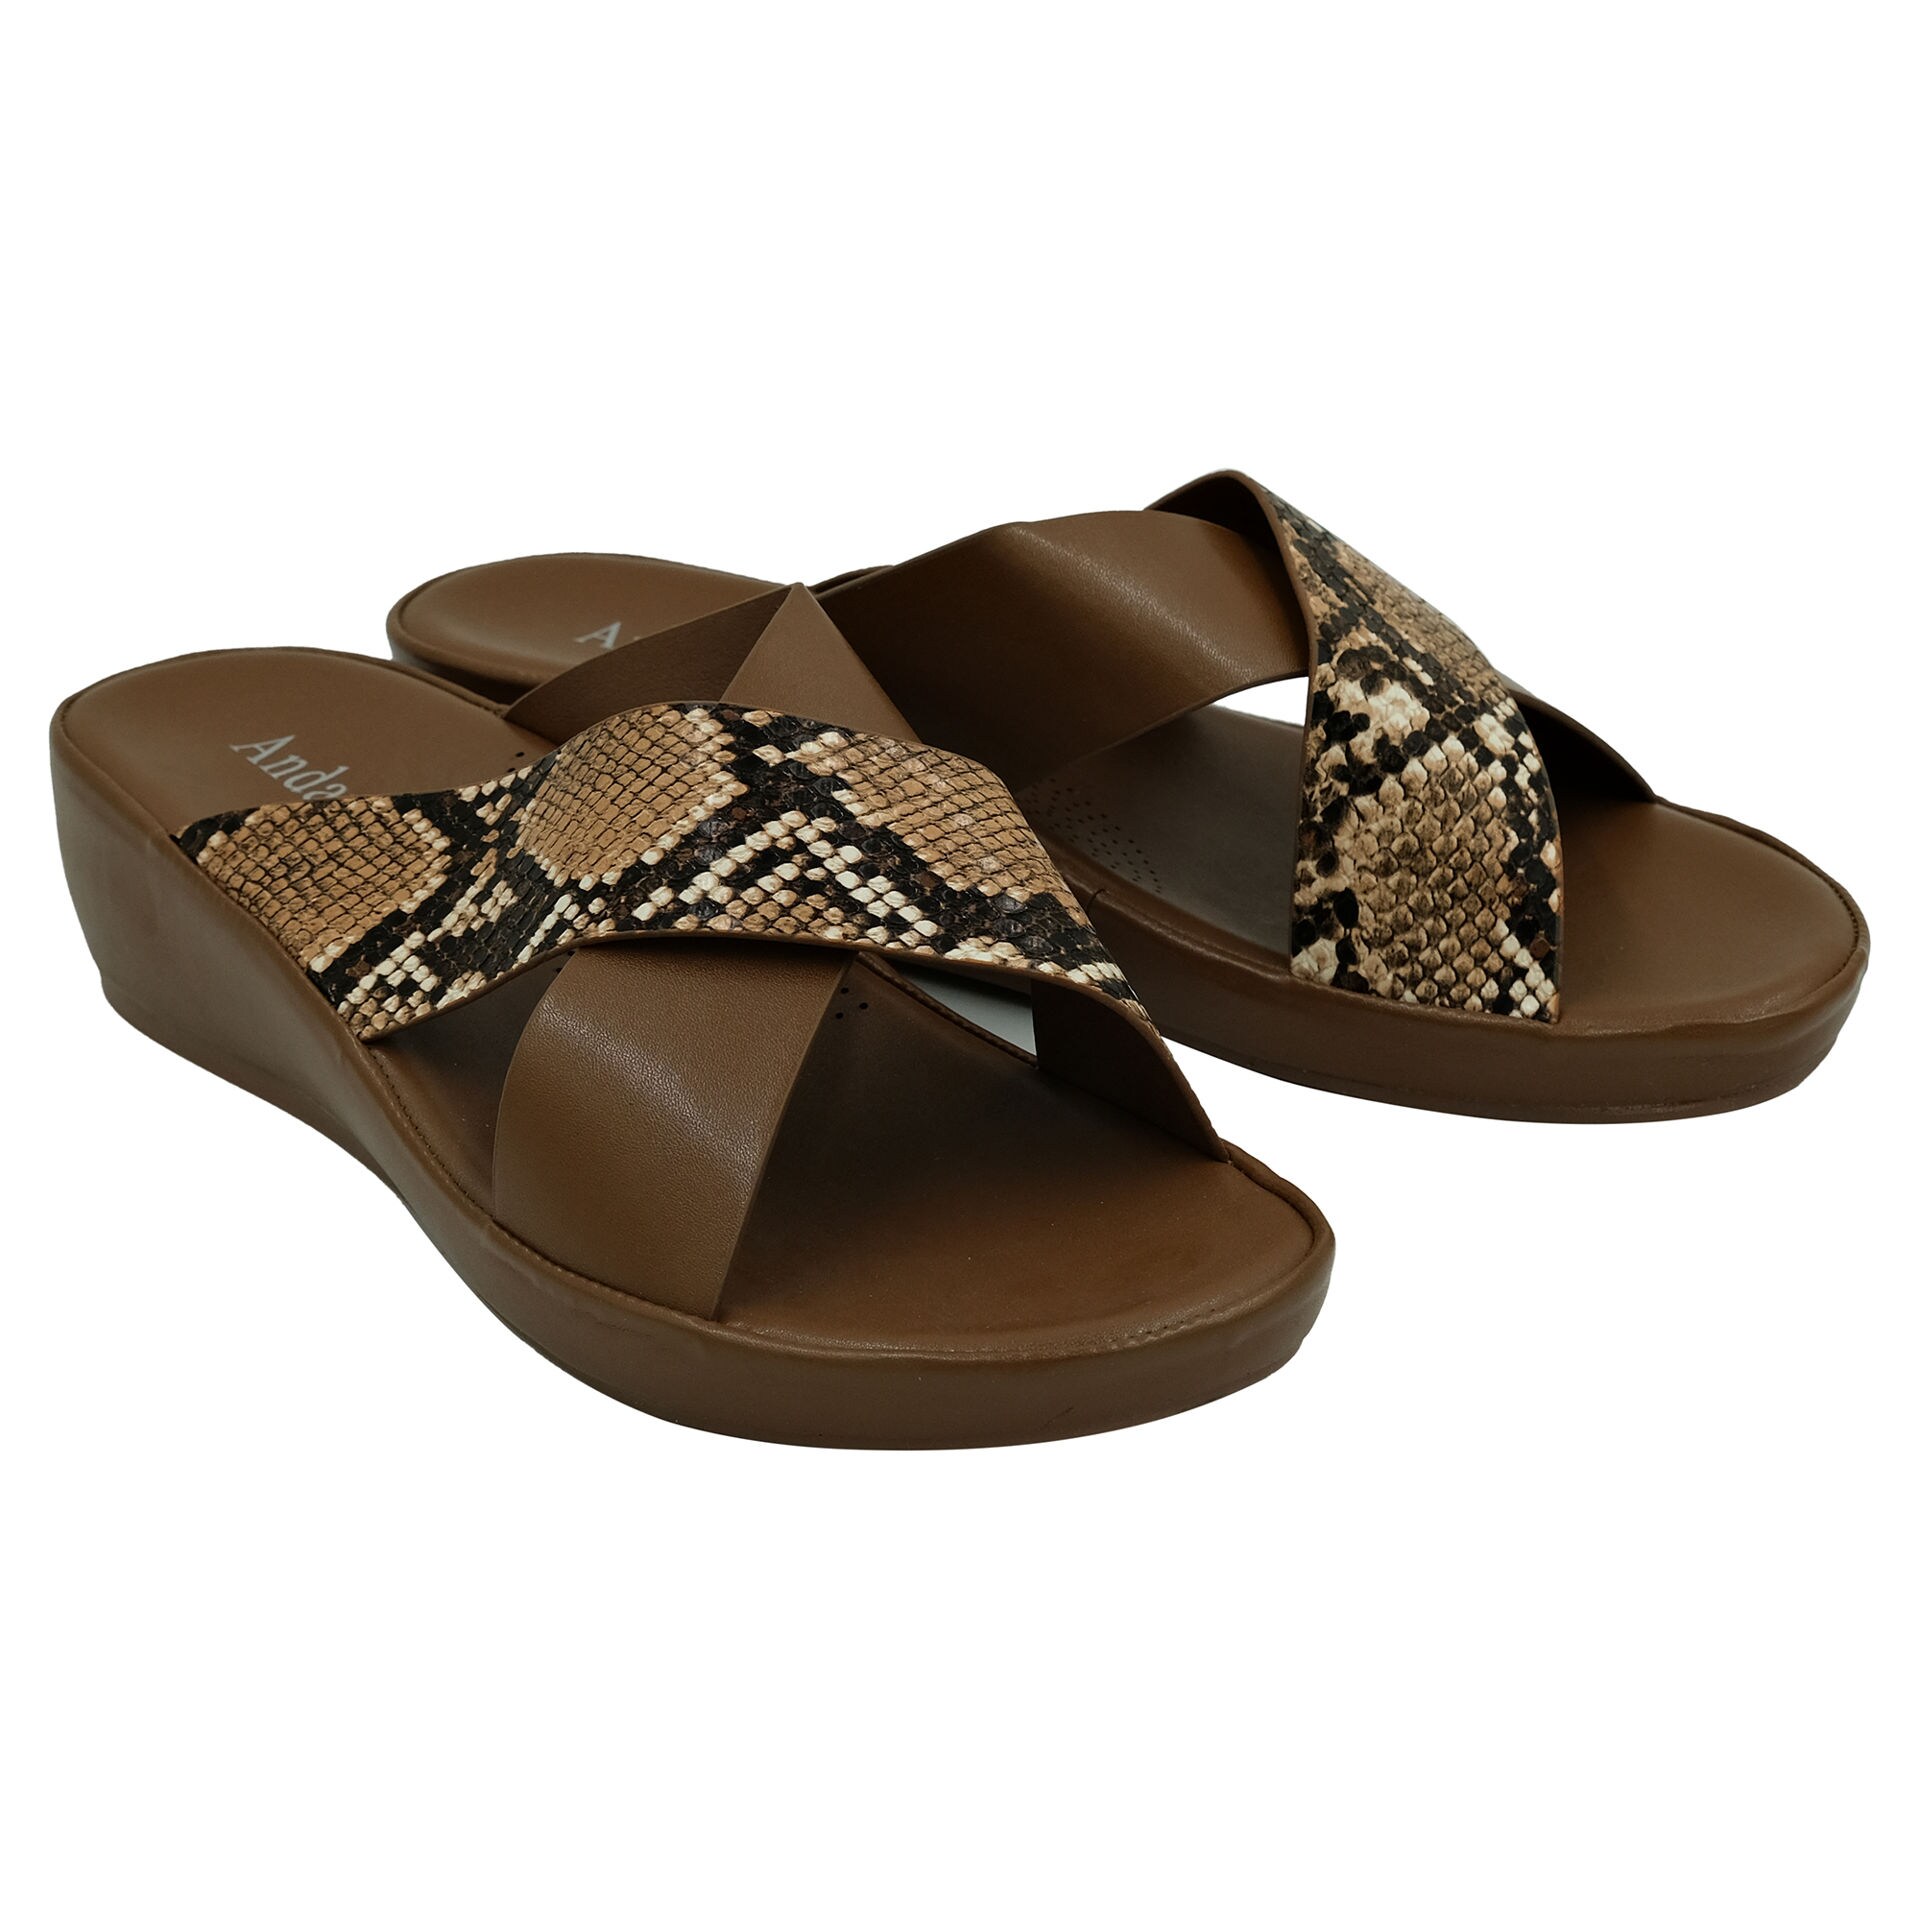 Shop Andarina Women's Wedge Sandals with Reptile Design | Dragon Mart UAE